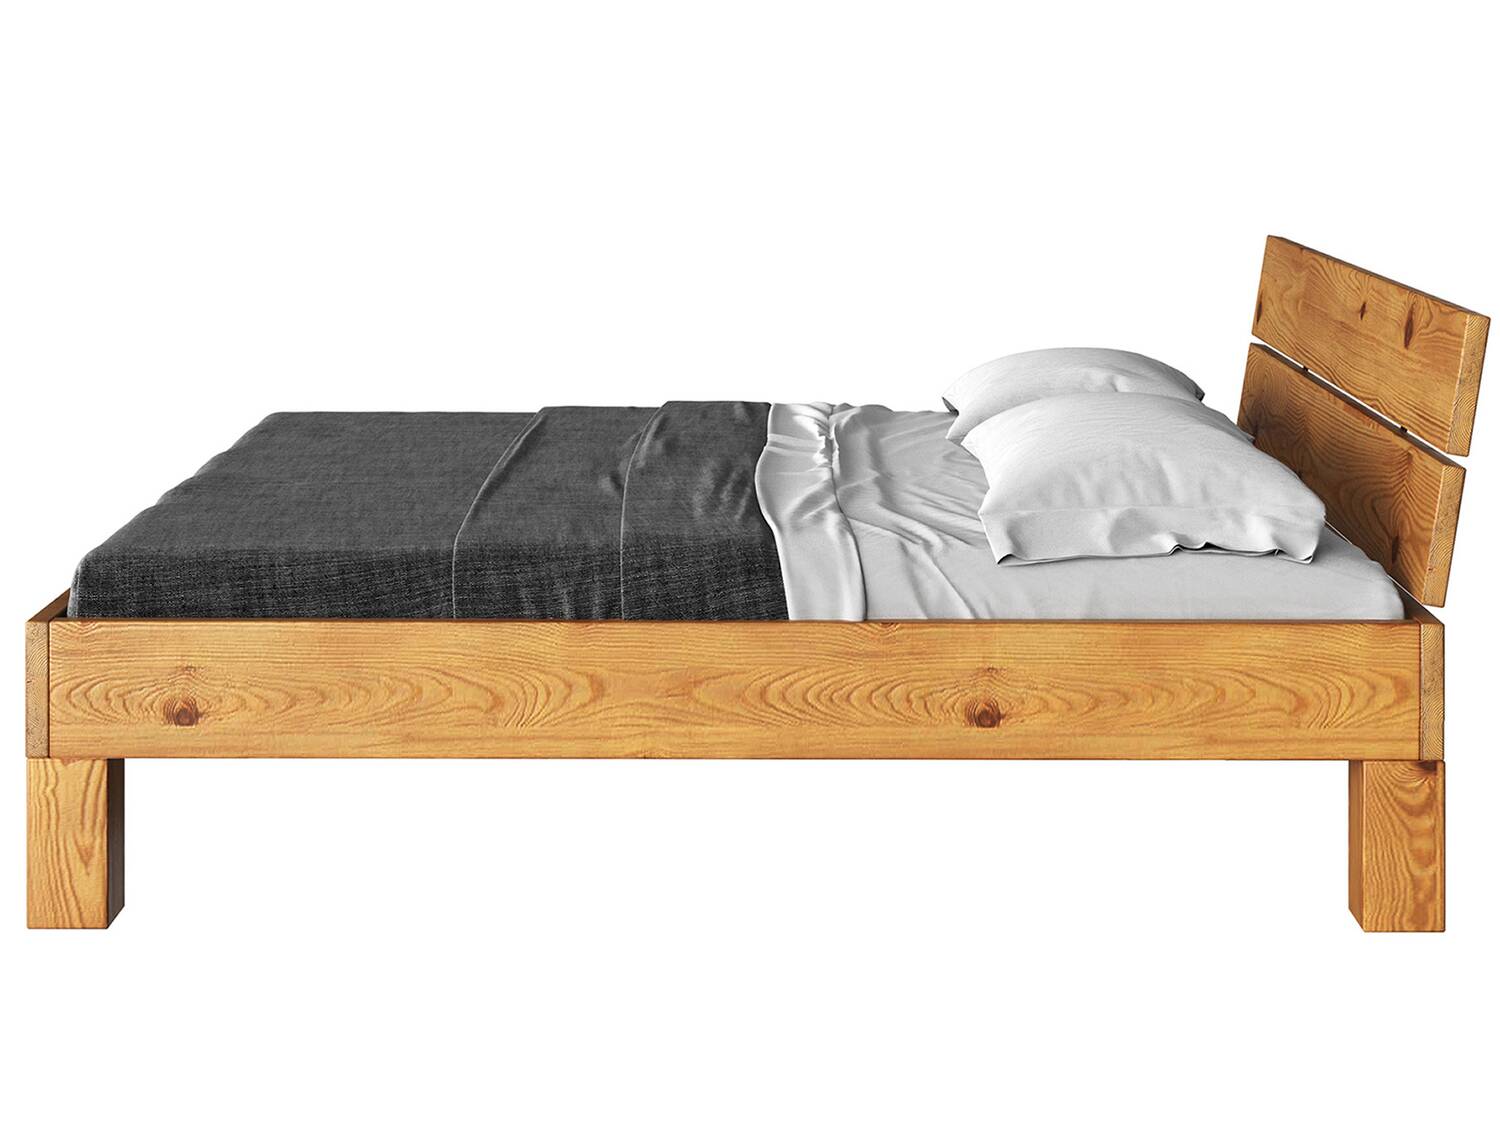 CURBY 4-Fuß-Bett mit Kopfteil, Material Massivholz, rustikale Altholzoptik, Fichte 90 x 200 cm | natur | Standardhöhe